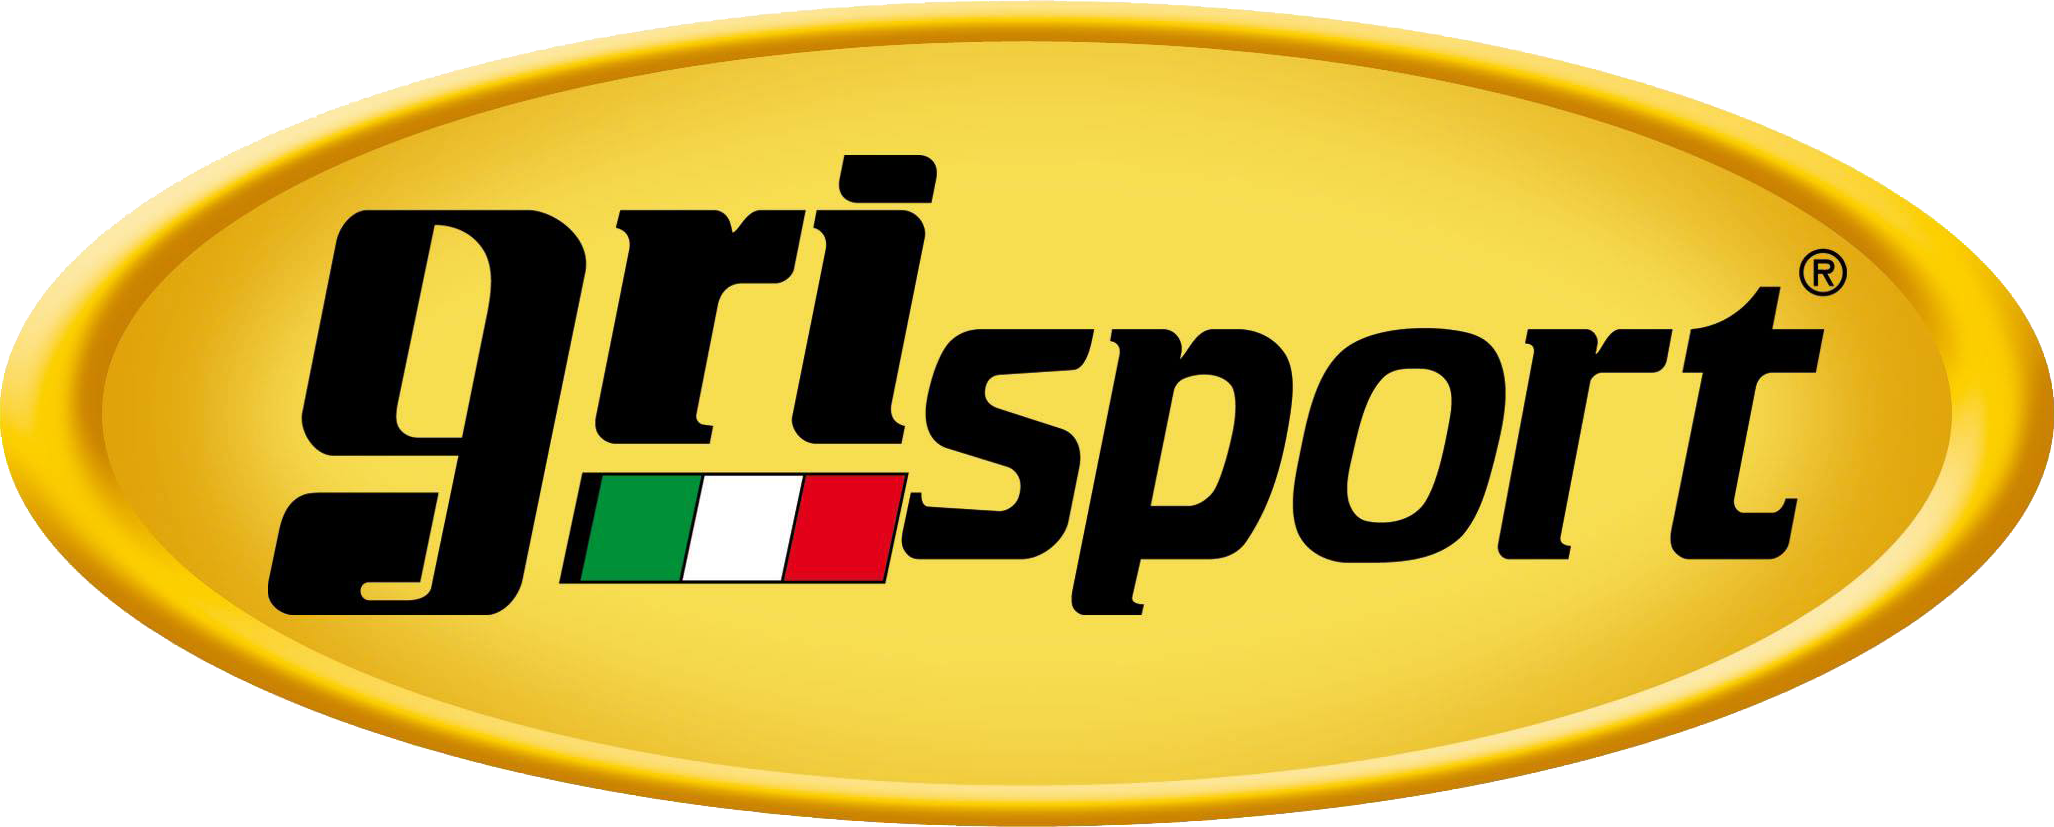 Grisport logo